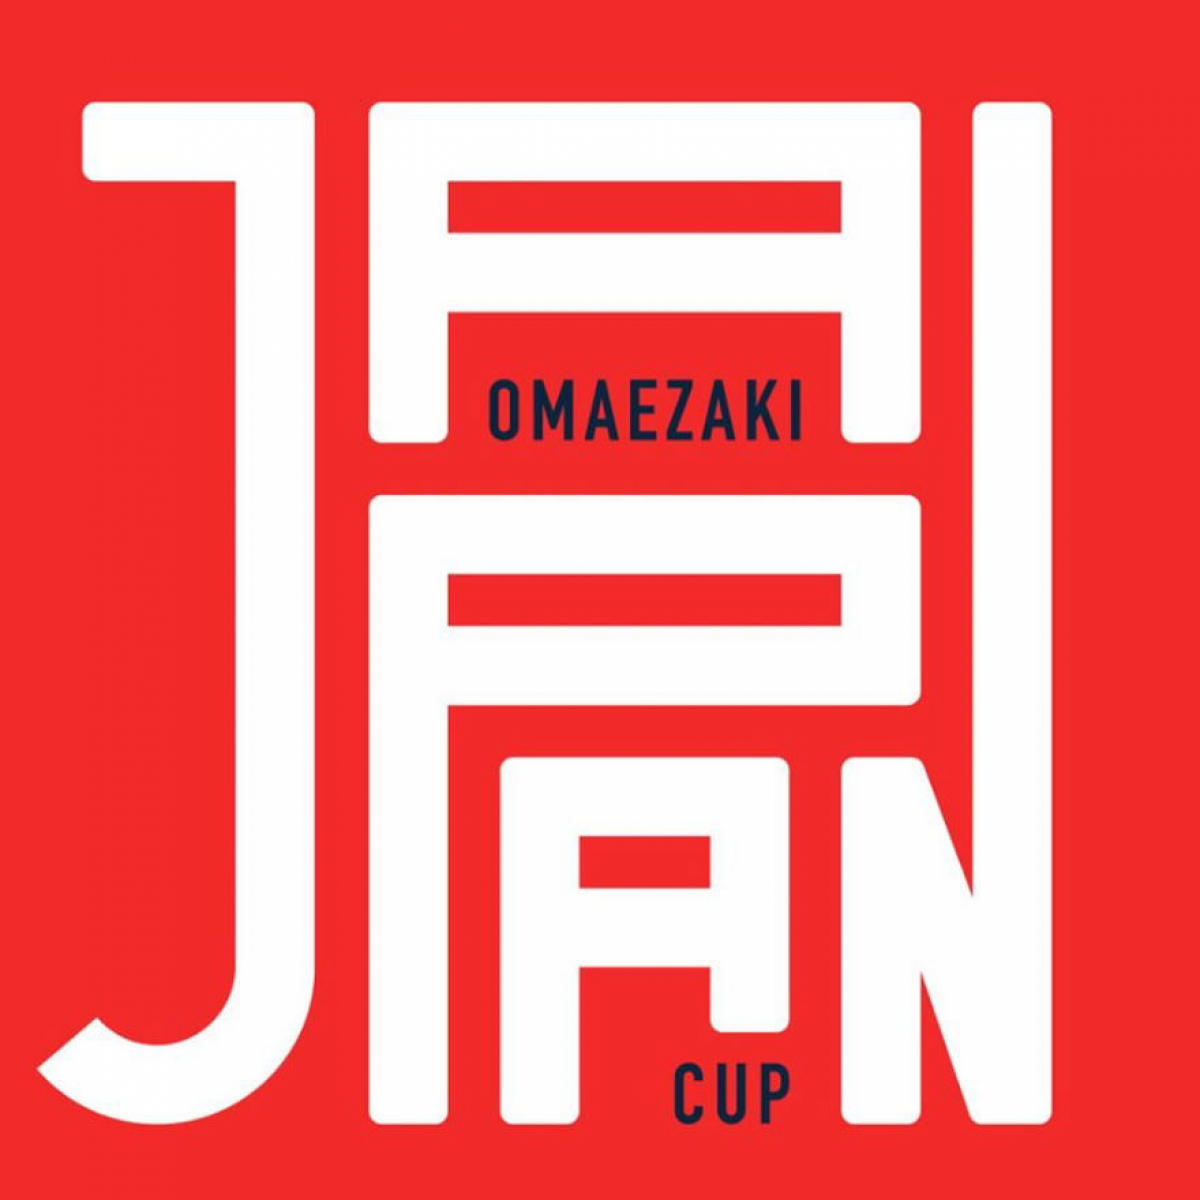 IWT Event abgesagt - Japan / Omaezaki